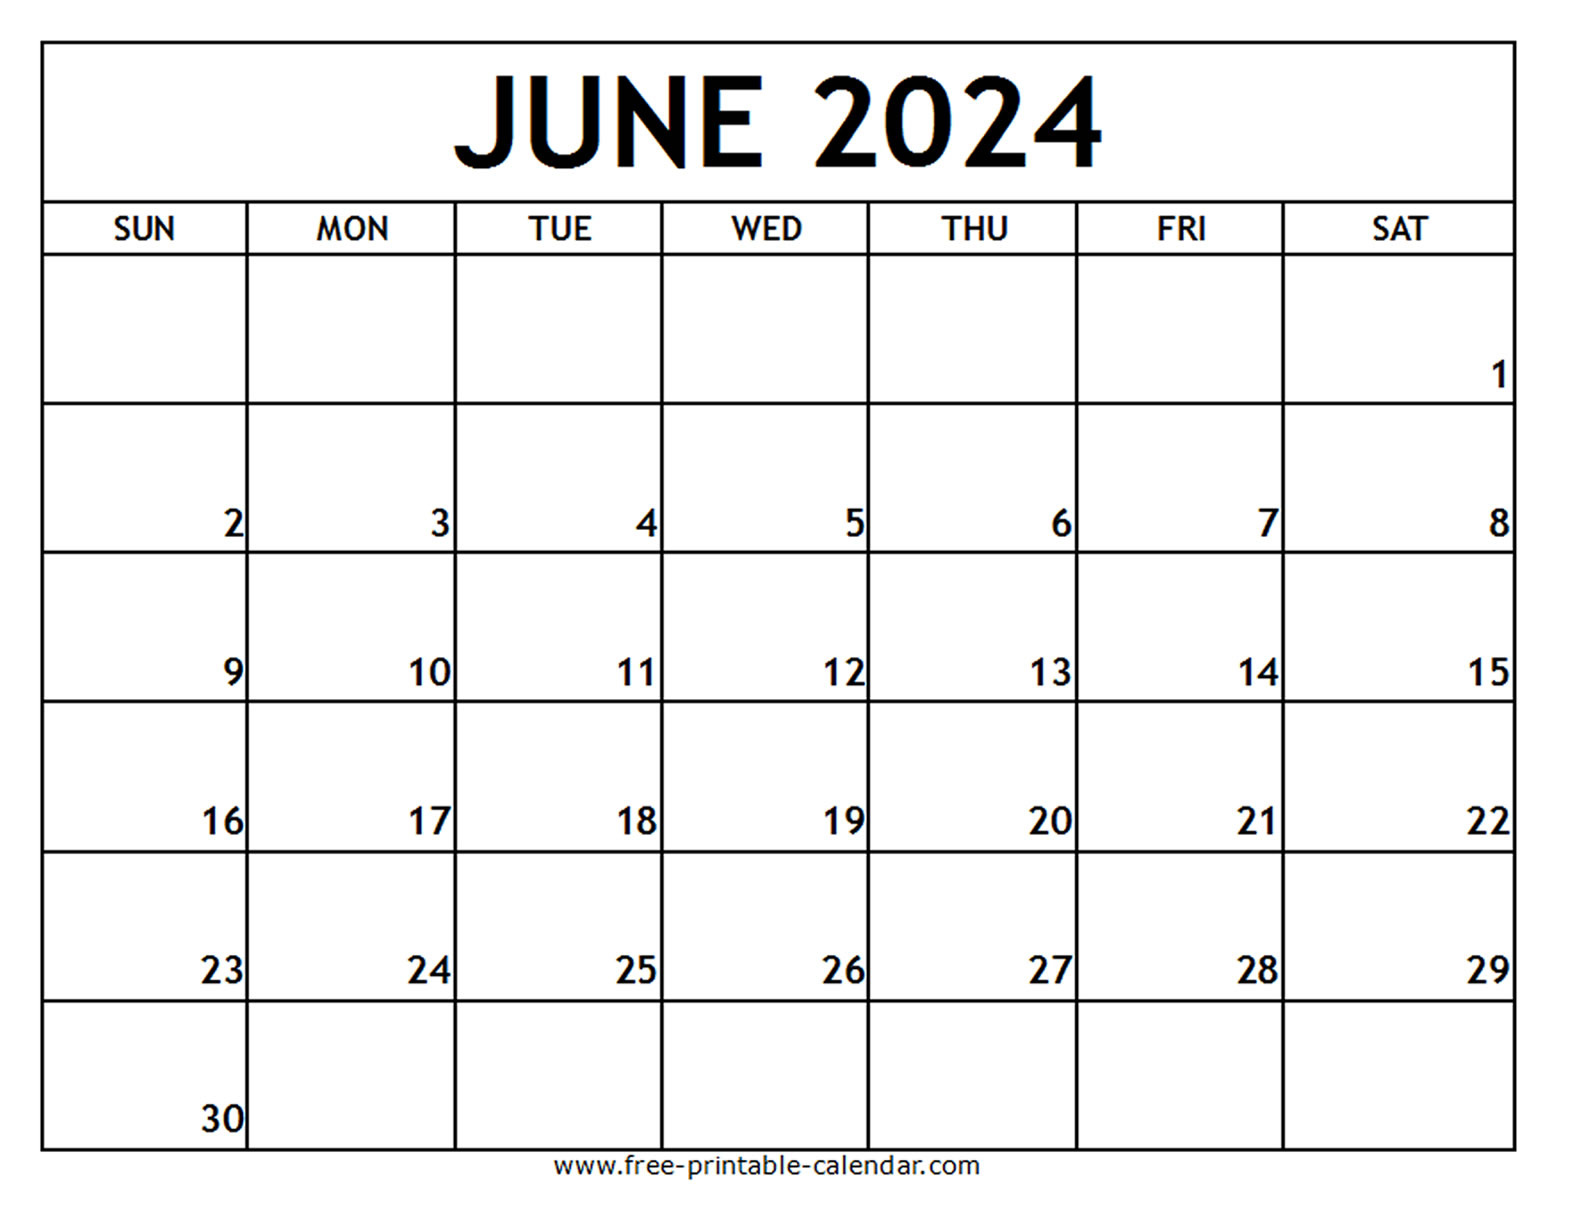 June 2024 Printable Calendar - Free-Printable-Calendar throughout Calendar To Print June 2024